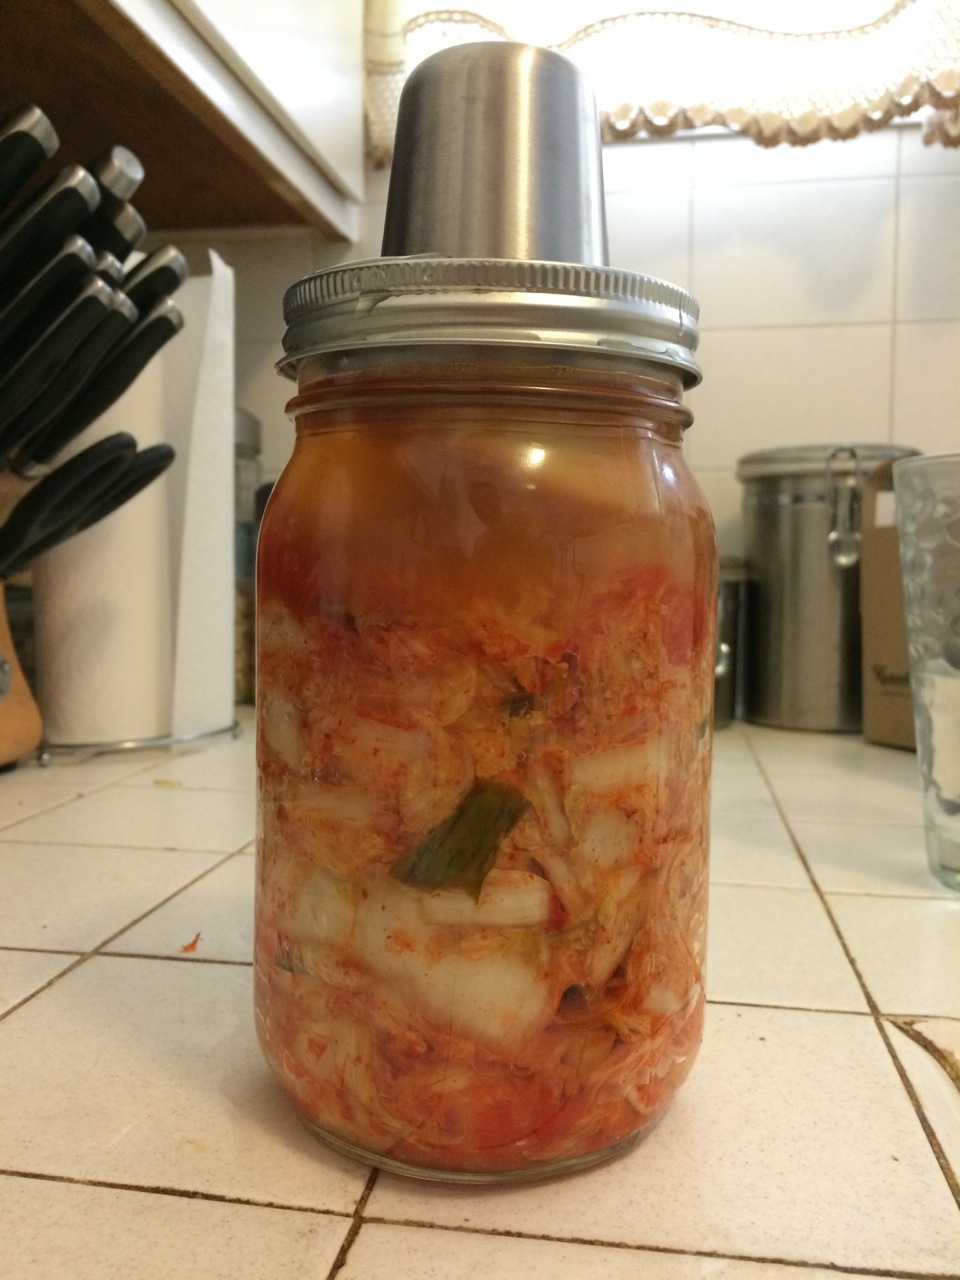 Krautsource kimchi after 6 days